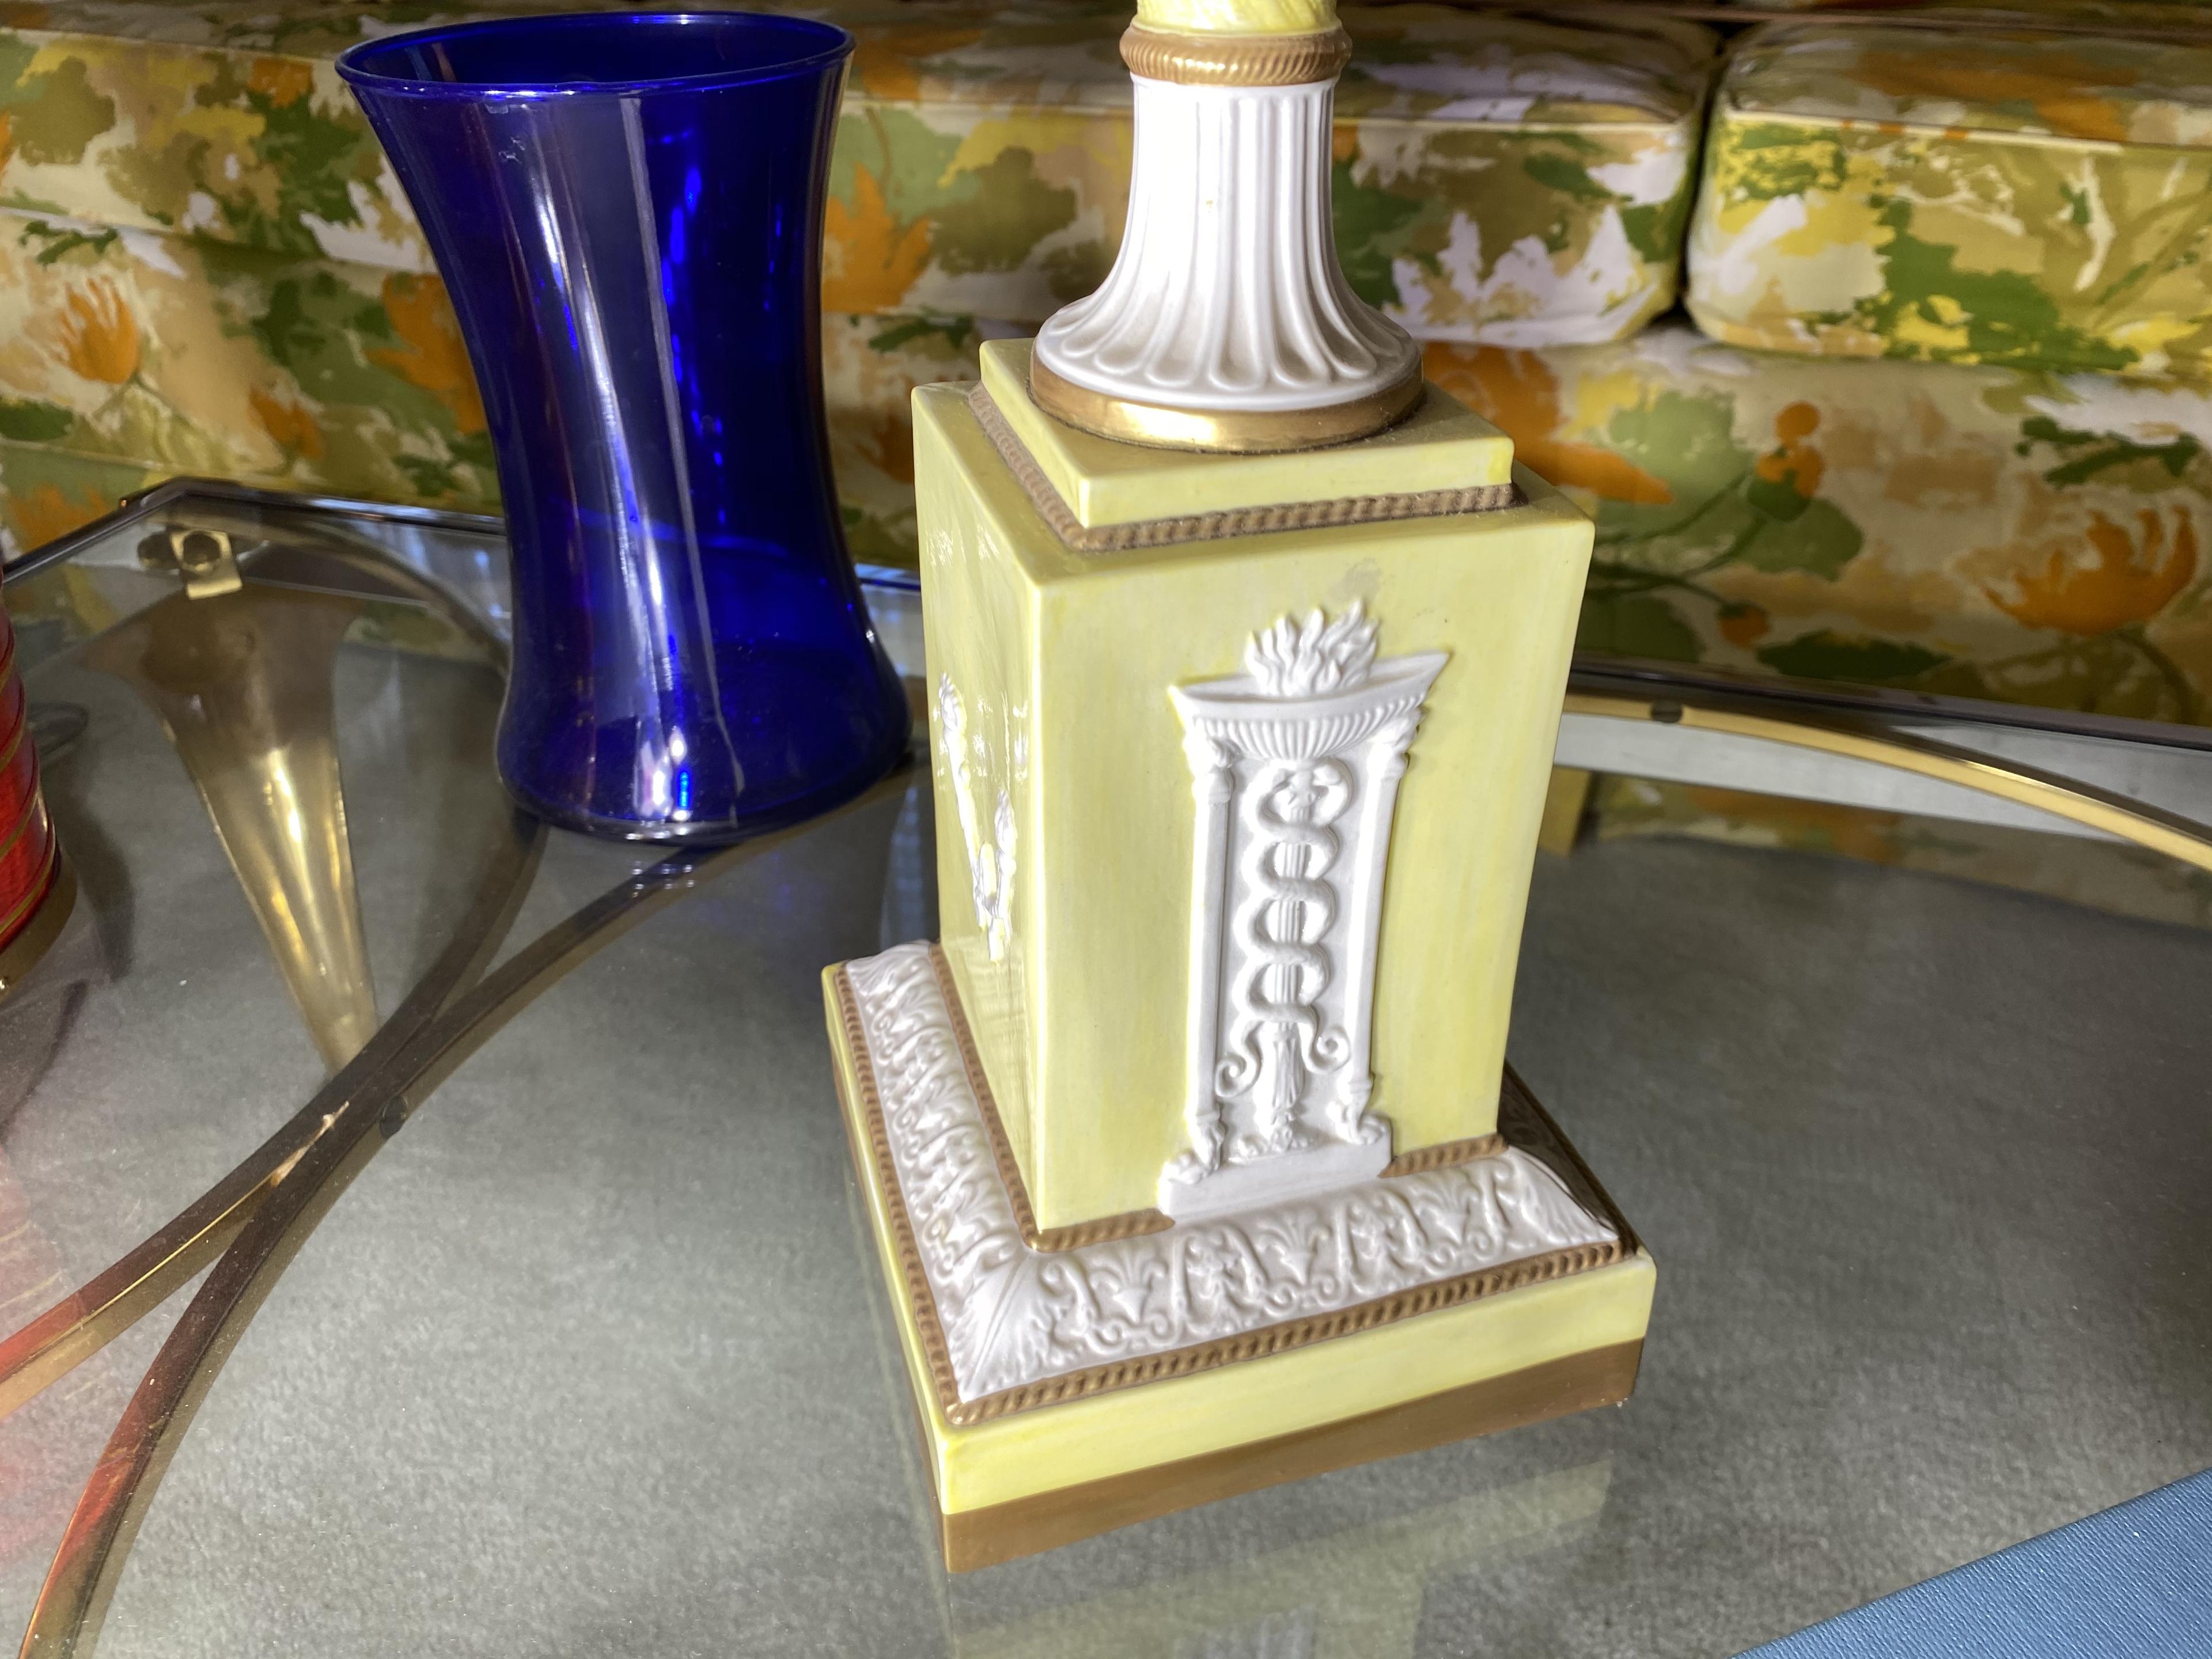 Items on table including Italian ceramic urn